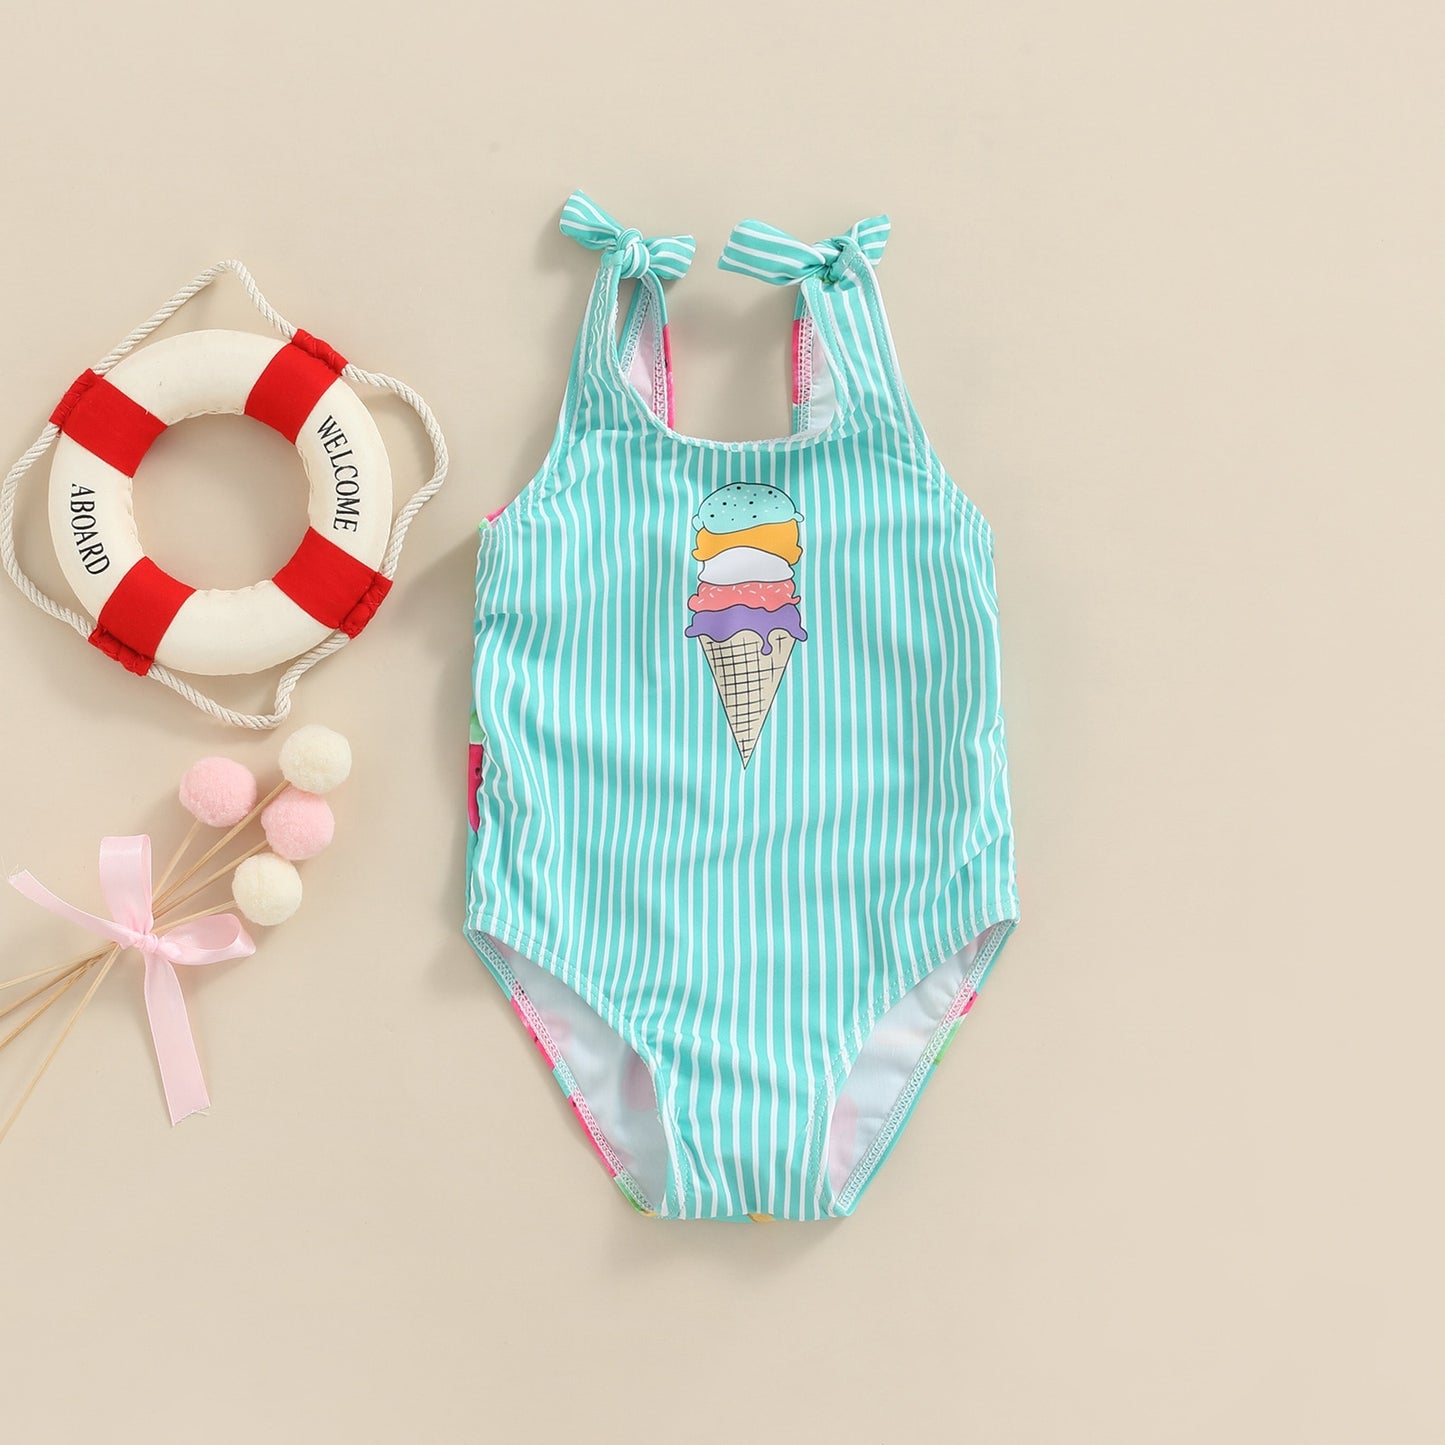 Baby & Toddler Girl Swimsuit Cute Stripe Pattern Ice Cream Printed Sleeveless Bodysuit